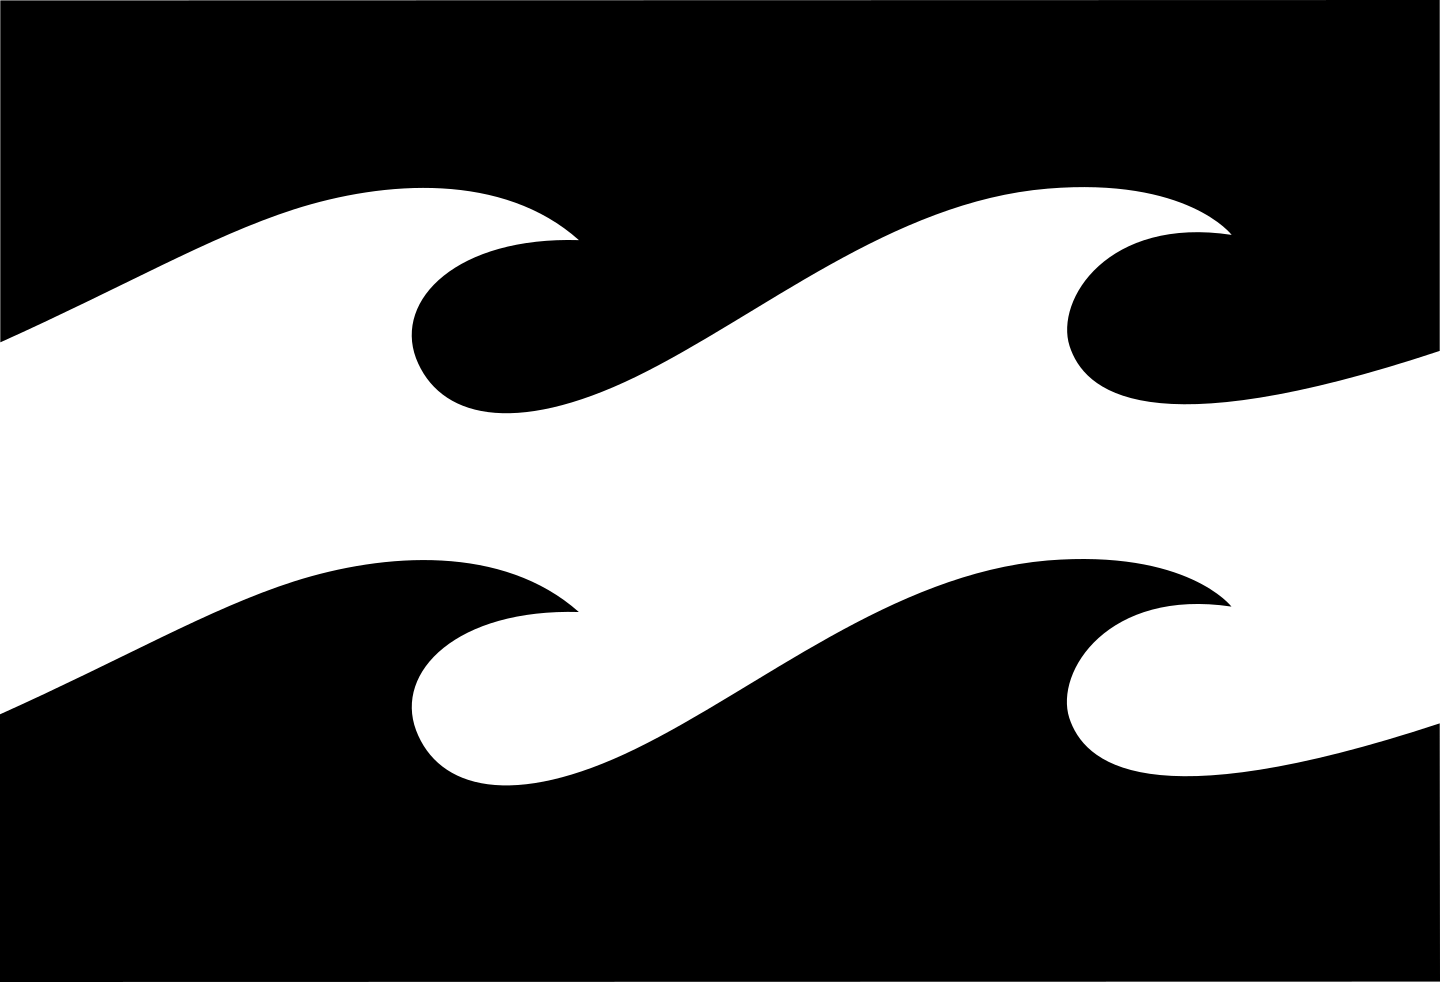 billabong logo 4 - Billabong Logo